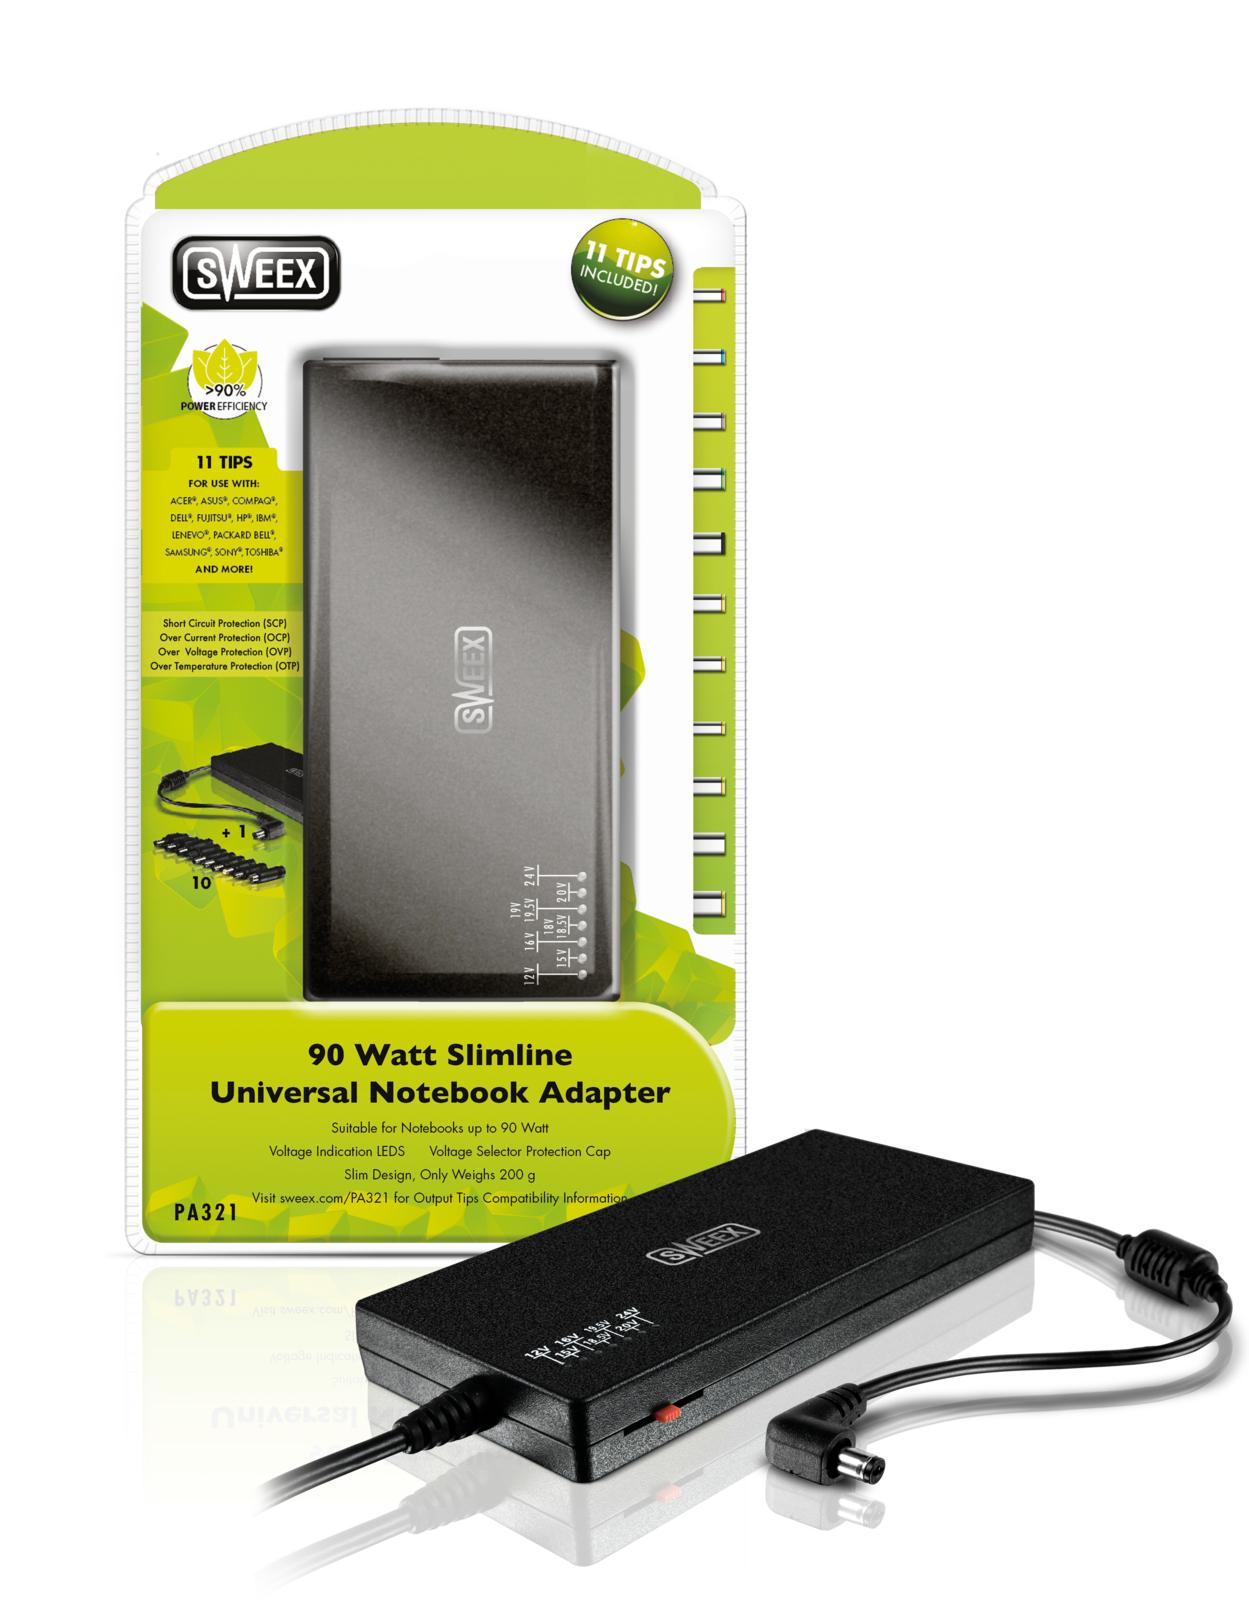 Foto Accesorio Sweex 90 watt slimline universal notecpnt [PA321] [87175340